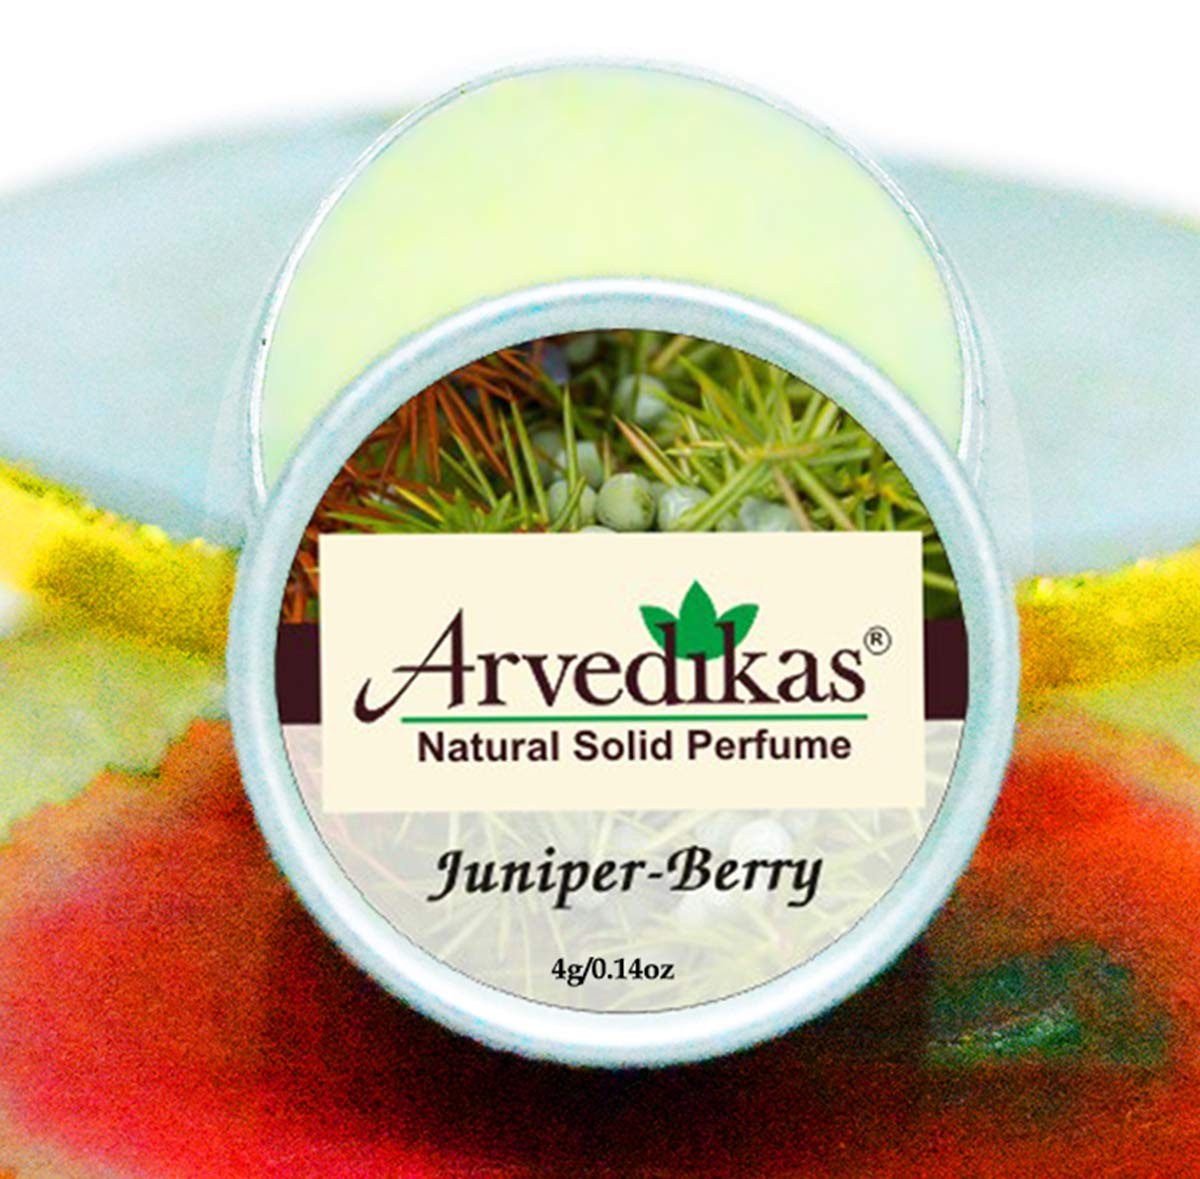 Juniper-Berry Natural Solid Perfume Organic Vegan Travel Perfume Pocket Size Compact Cologne